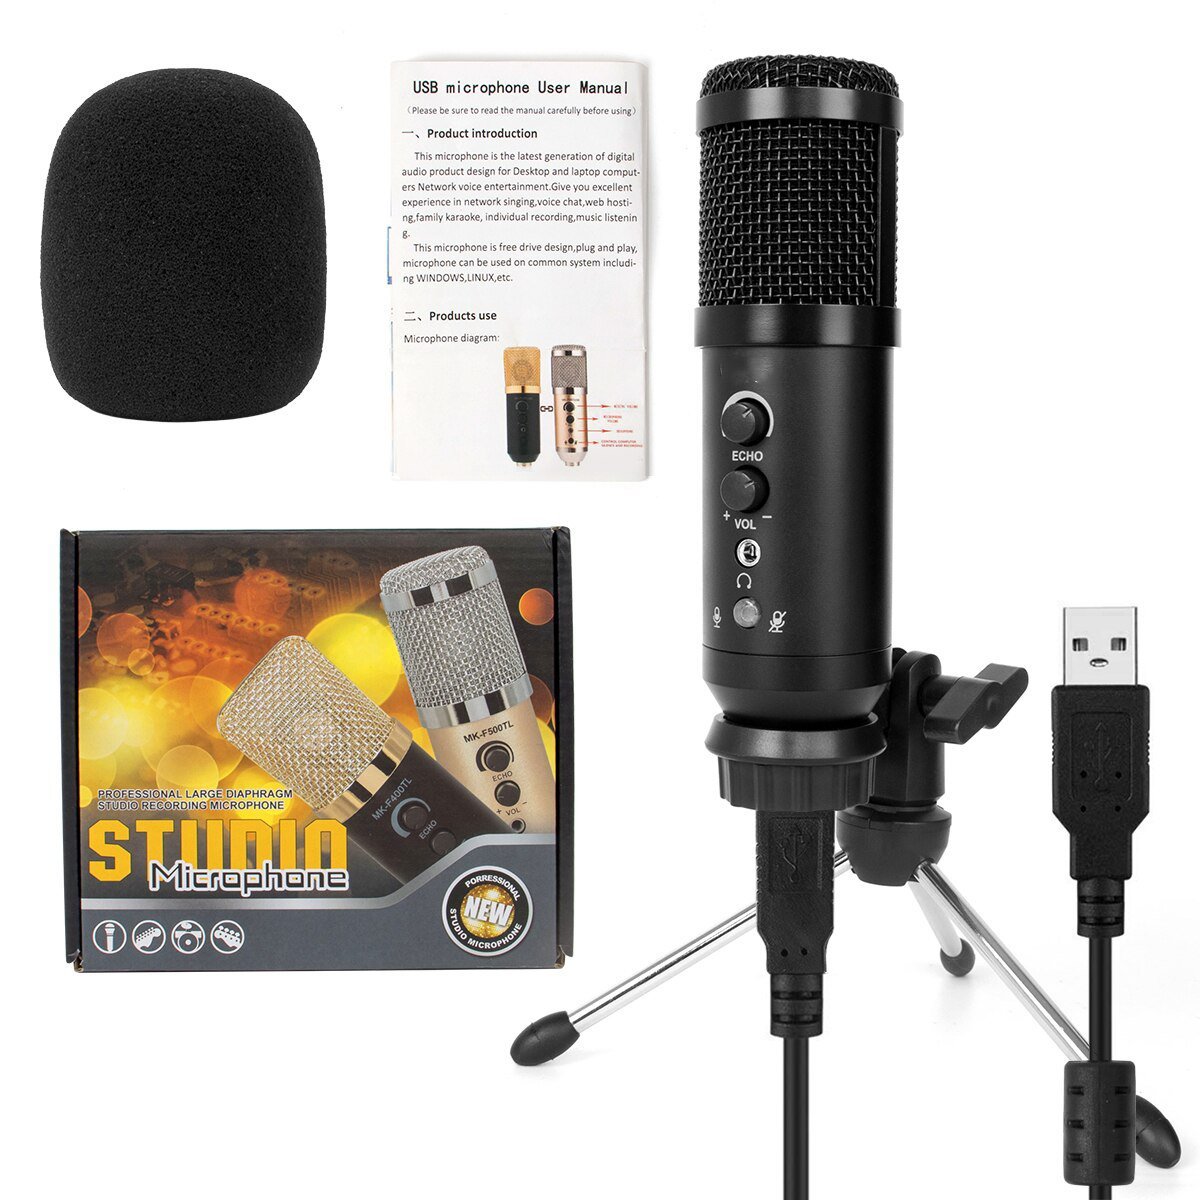 USB Condenser Microphone 16mm Large Diaphragm for Window&Mac Multipurpose Mic for Studio Recording Gaming Broadcast - AKLOT